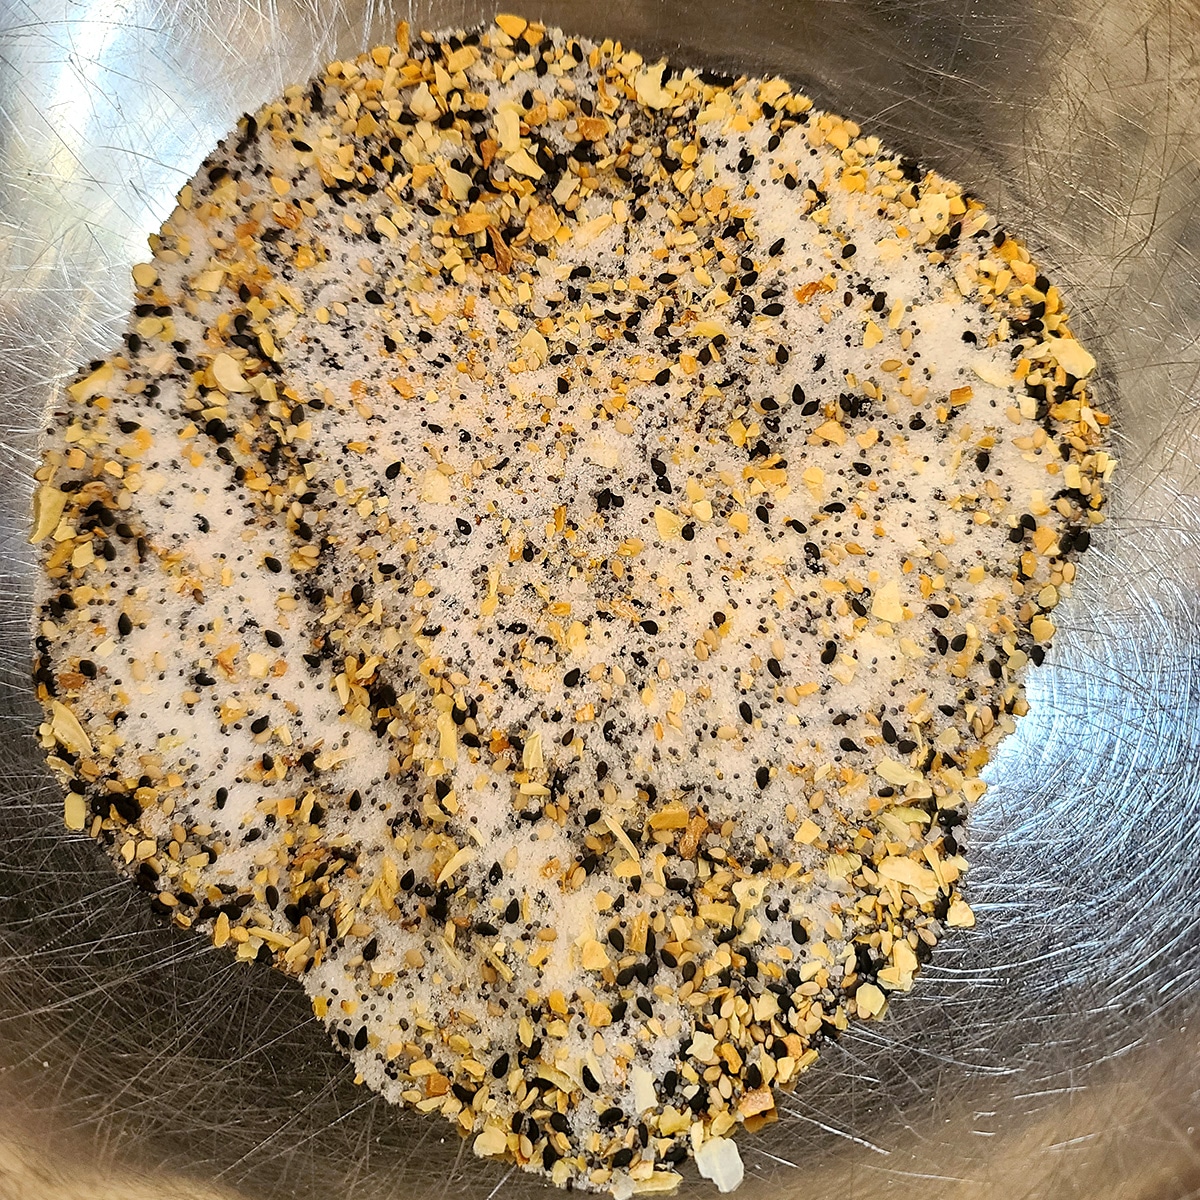 Sugar and everything bagel seasoning, in a metal bowl.